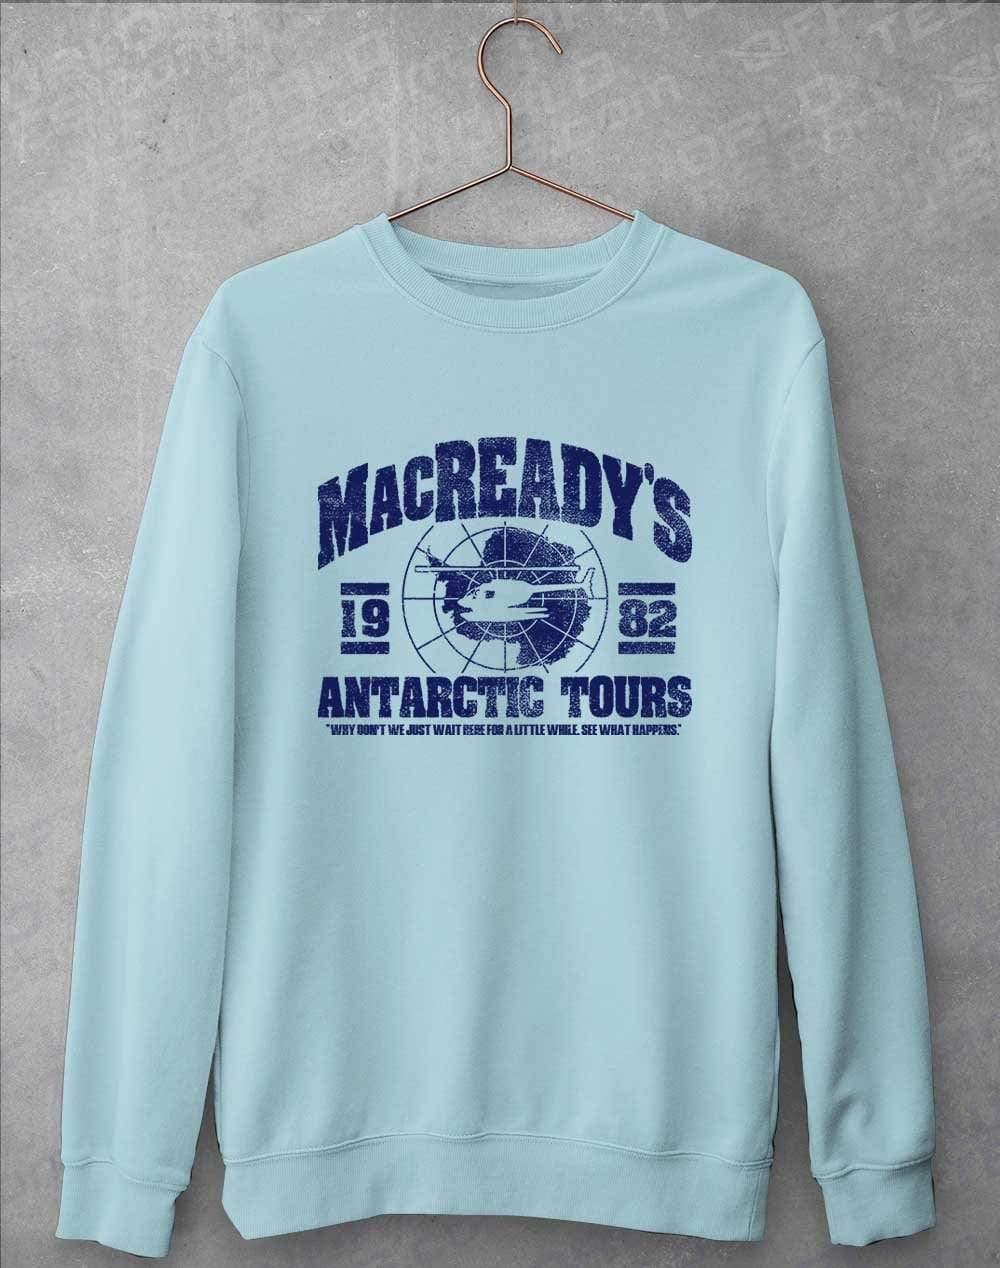 MacReady's Antarctic Tours 1982 Sweatshirt S / Sky Blue  - Off World Tees